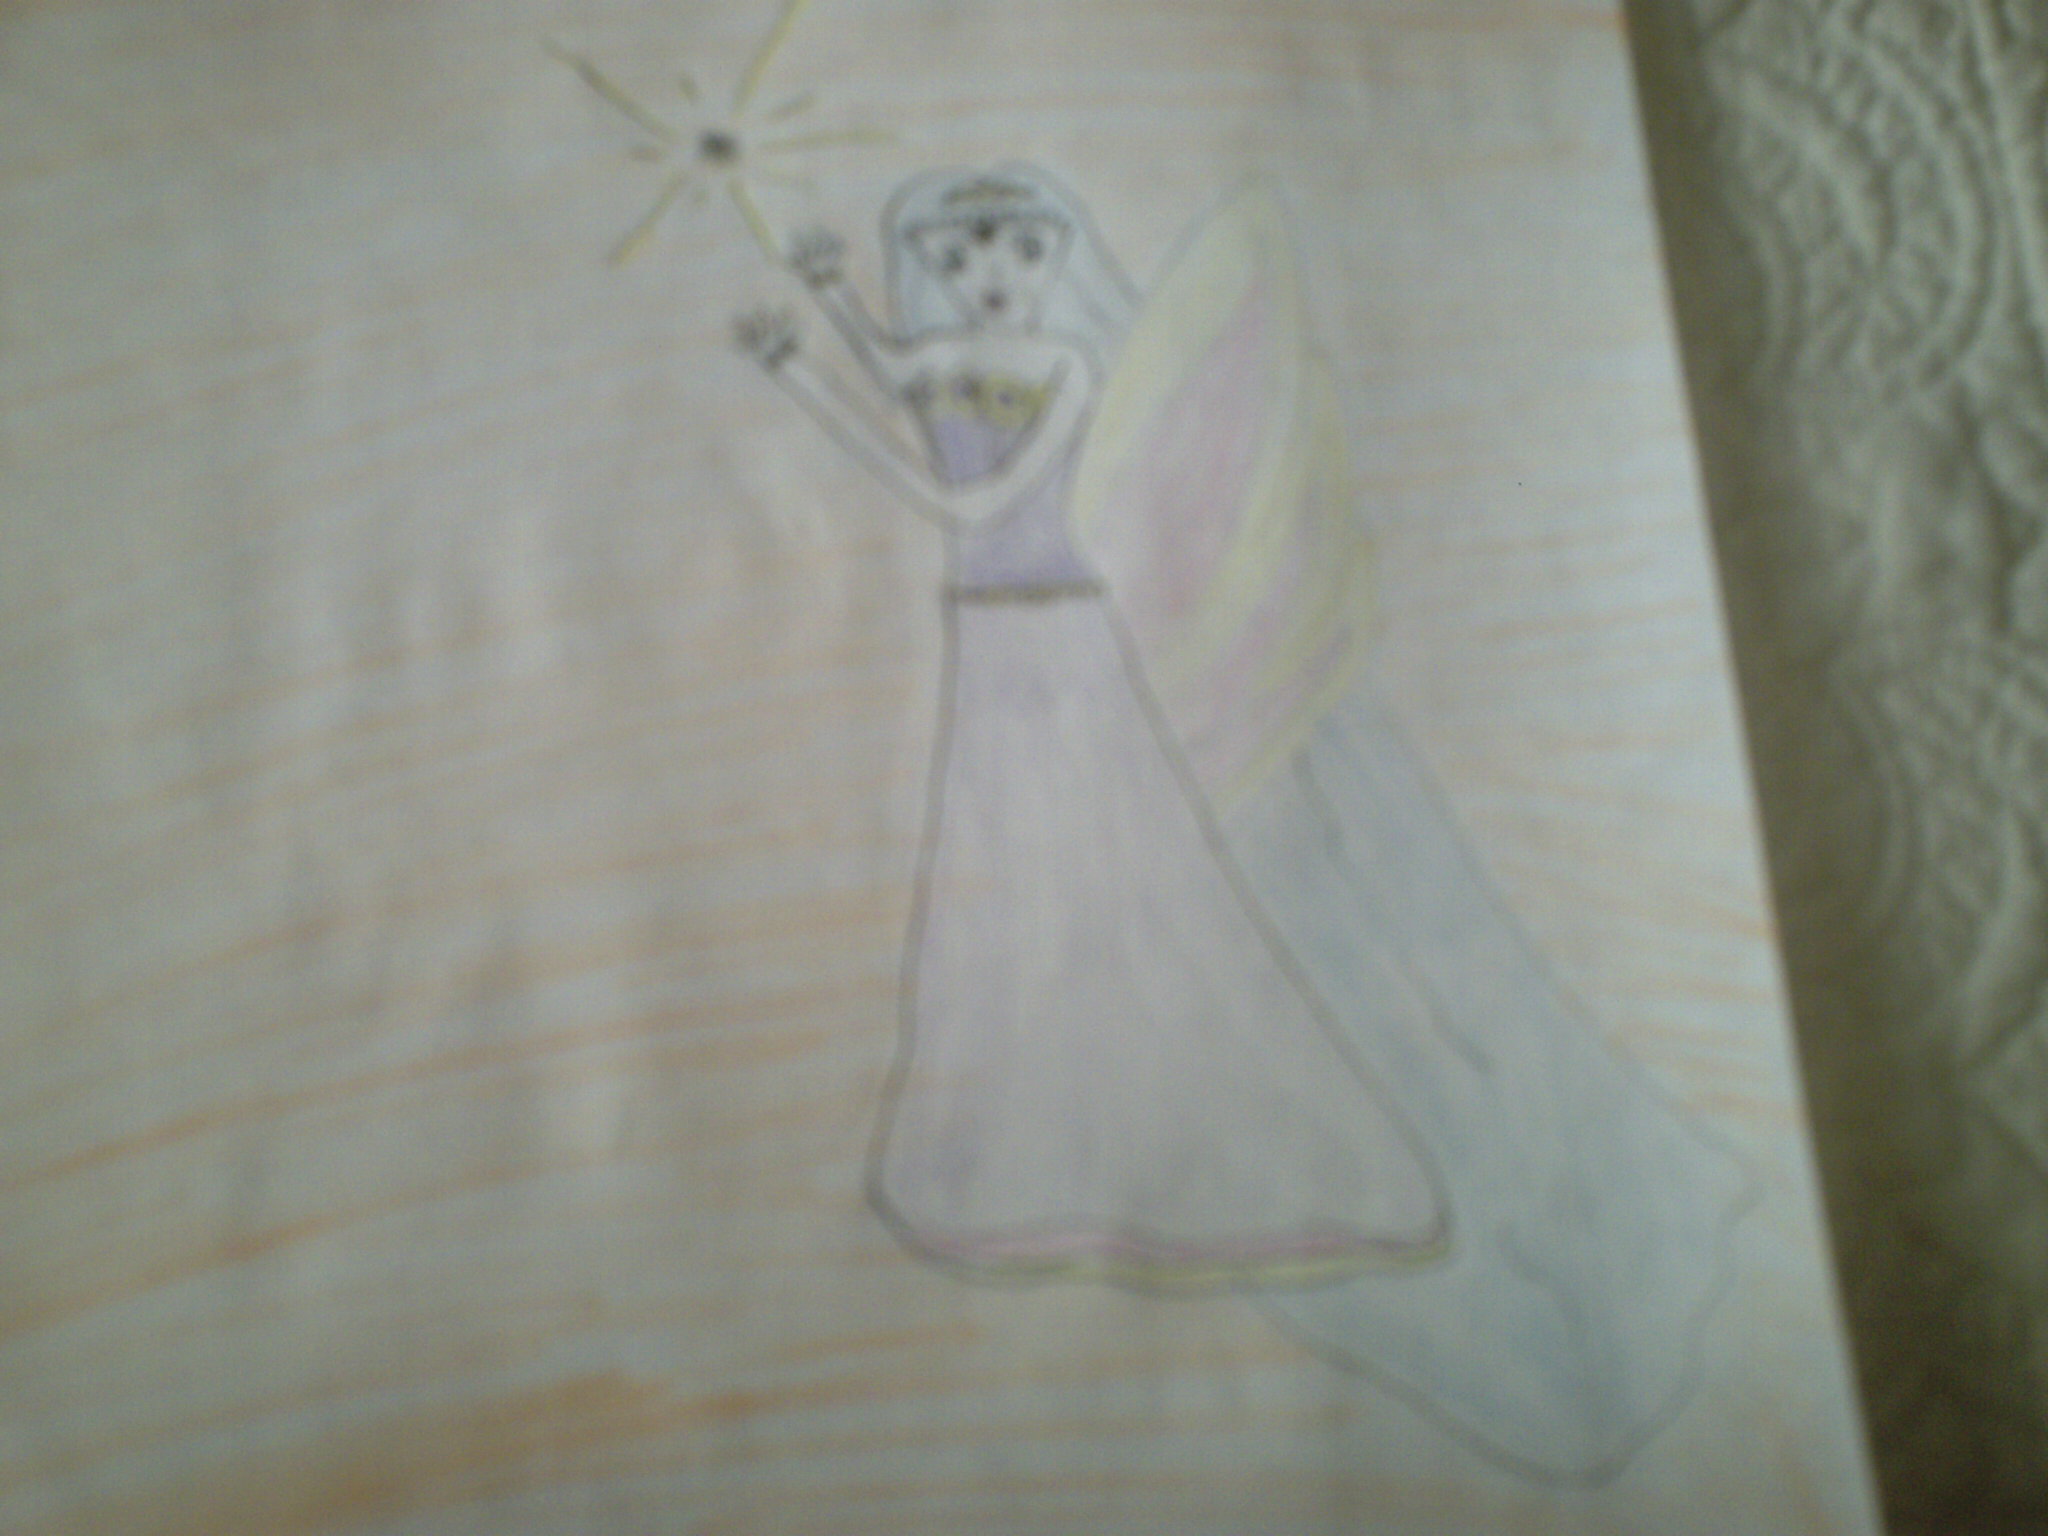 My oc princess Celest a.k.a. Princess Aquarius by lunagirl13